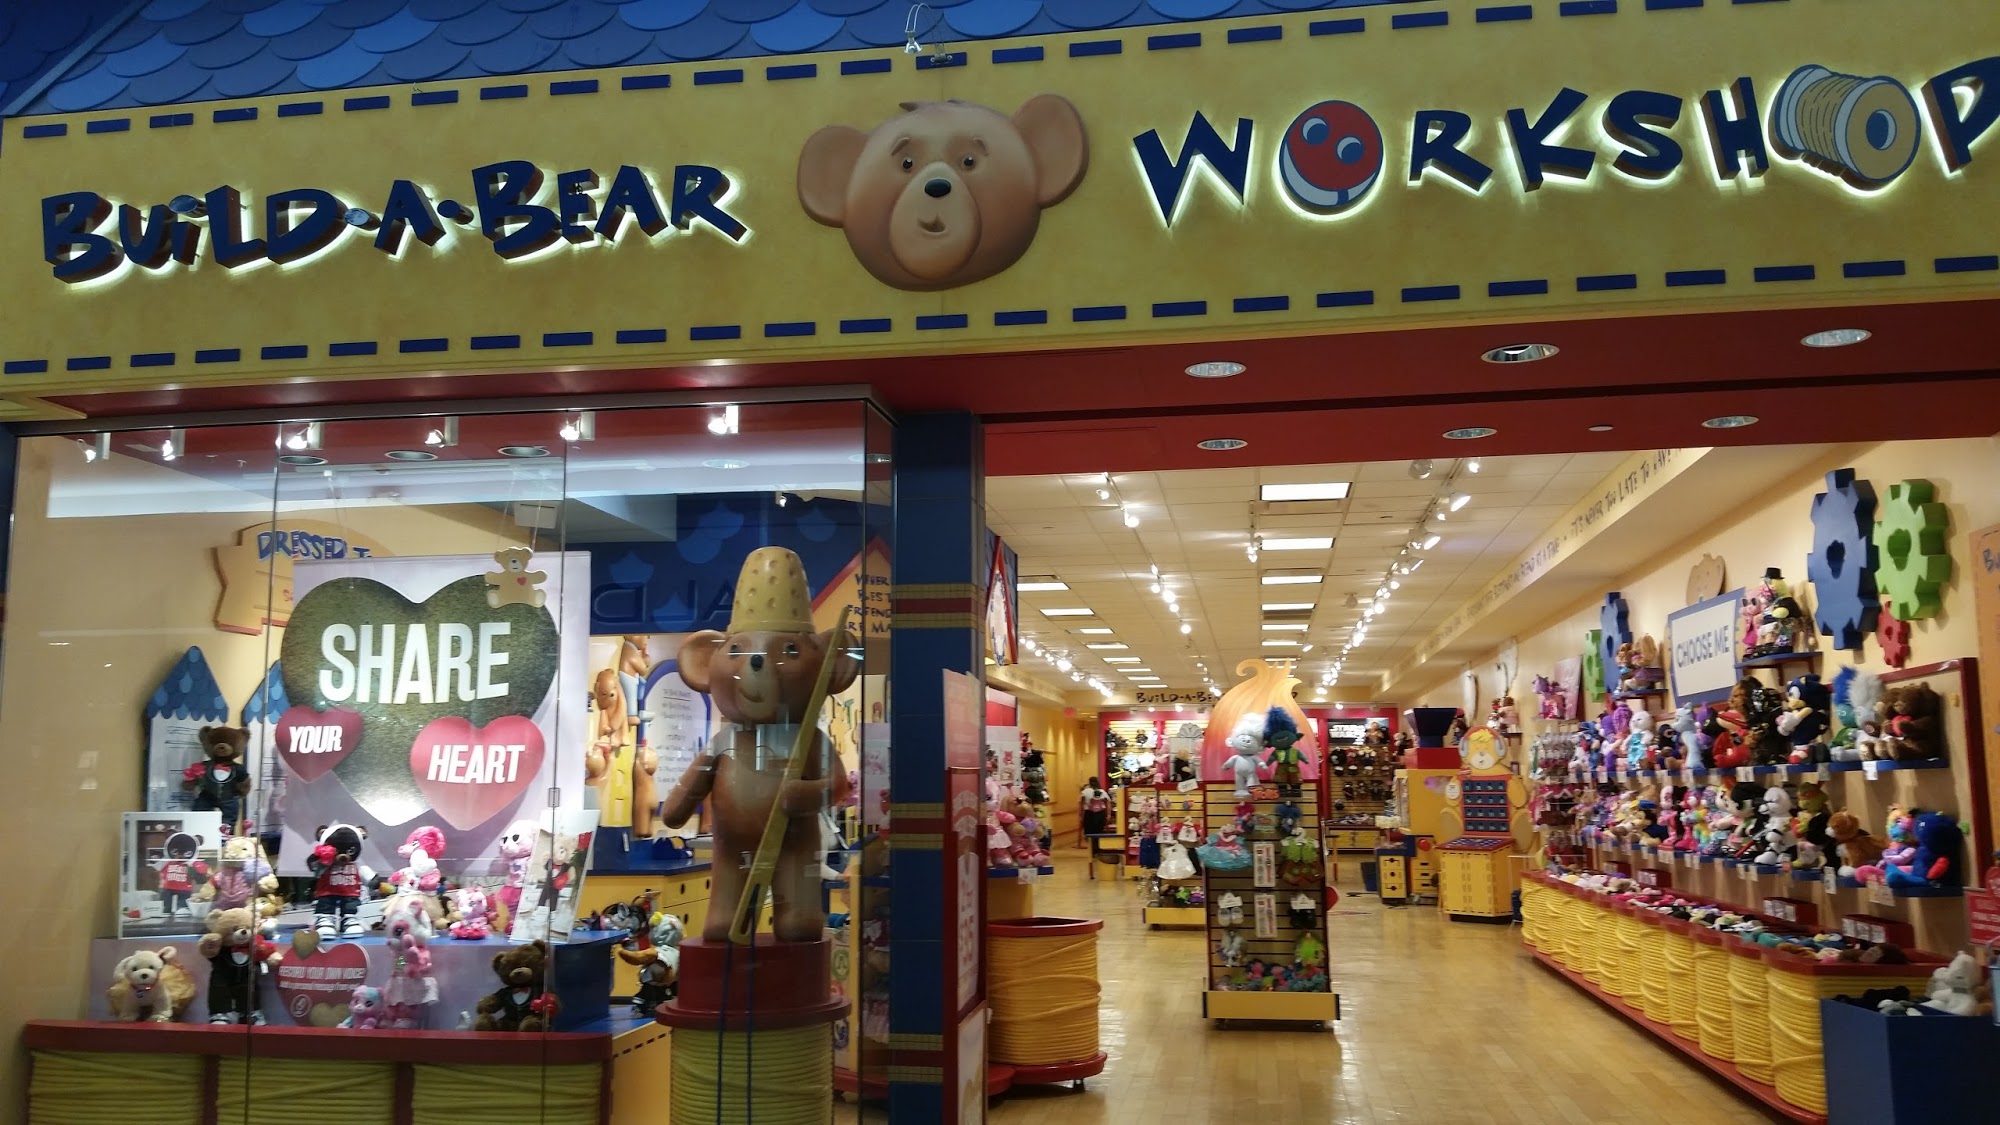 Build-A-Bear Workshop